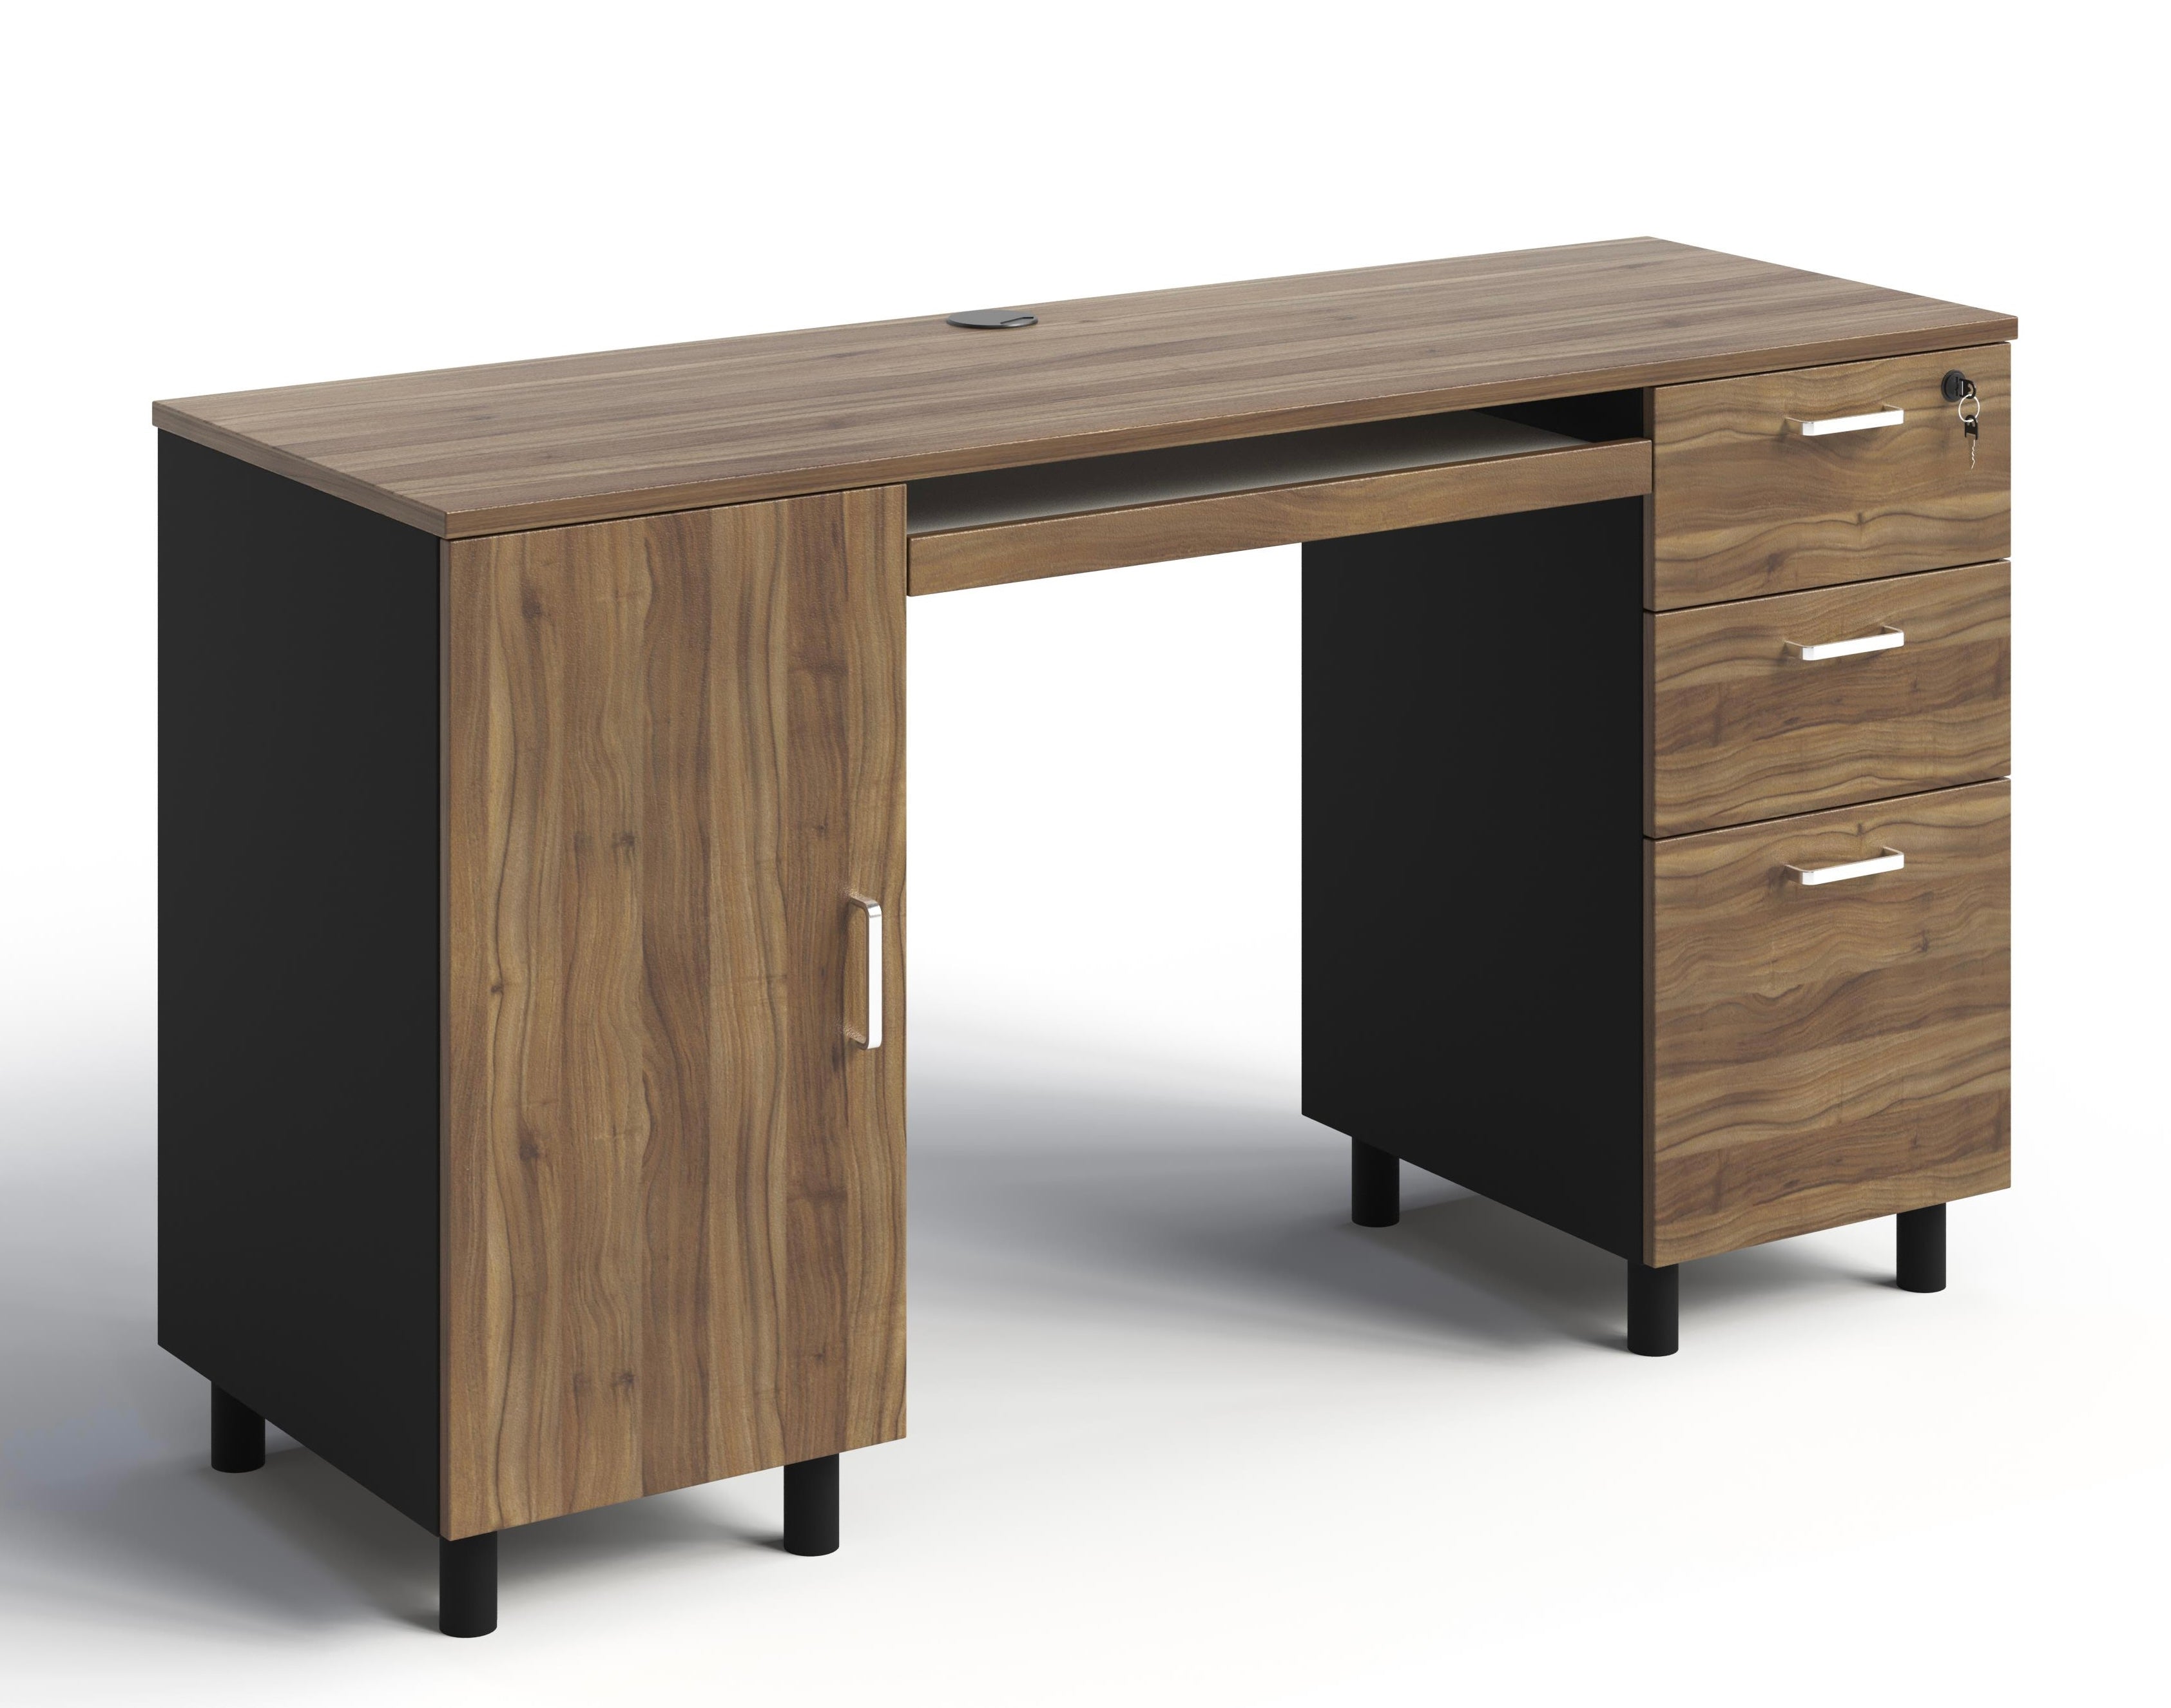 Venture Horizon VHZ Office Craft Table  Craft room furniture, Mobile desk,  Office crafts